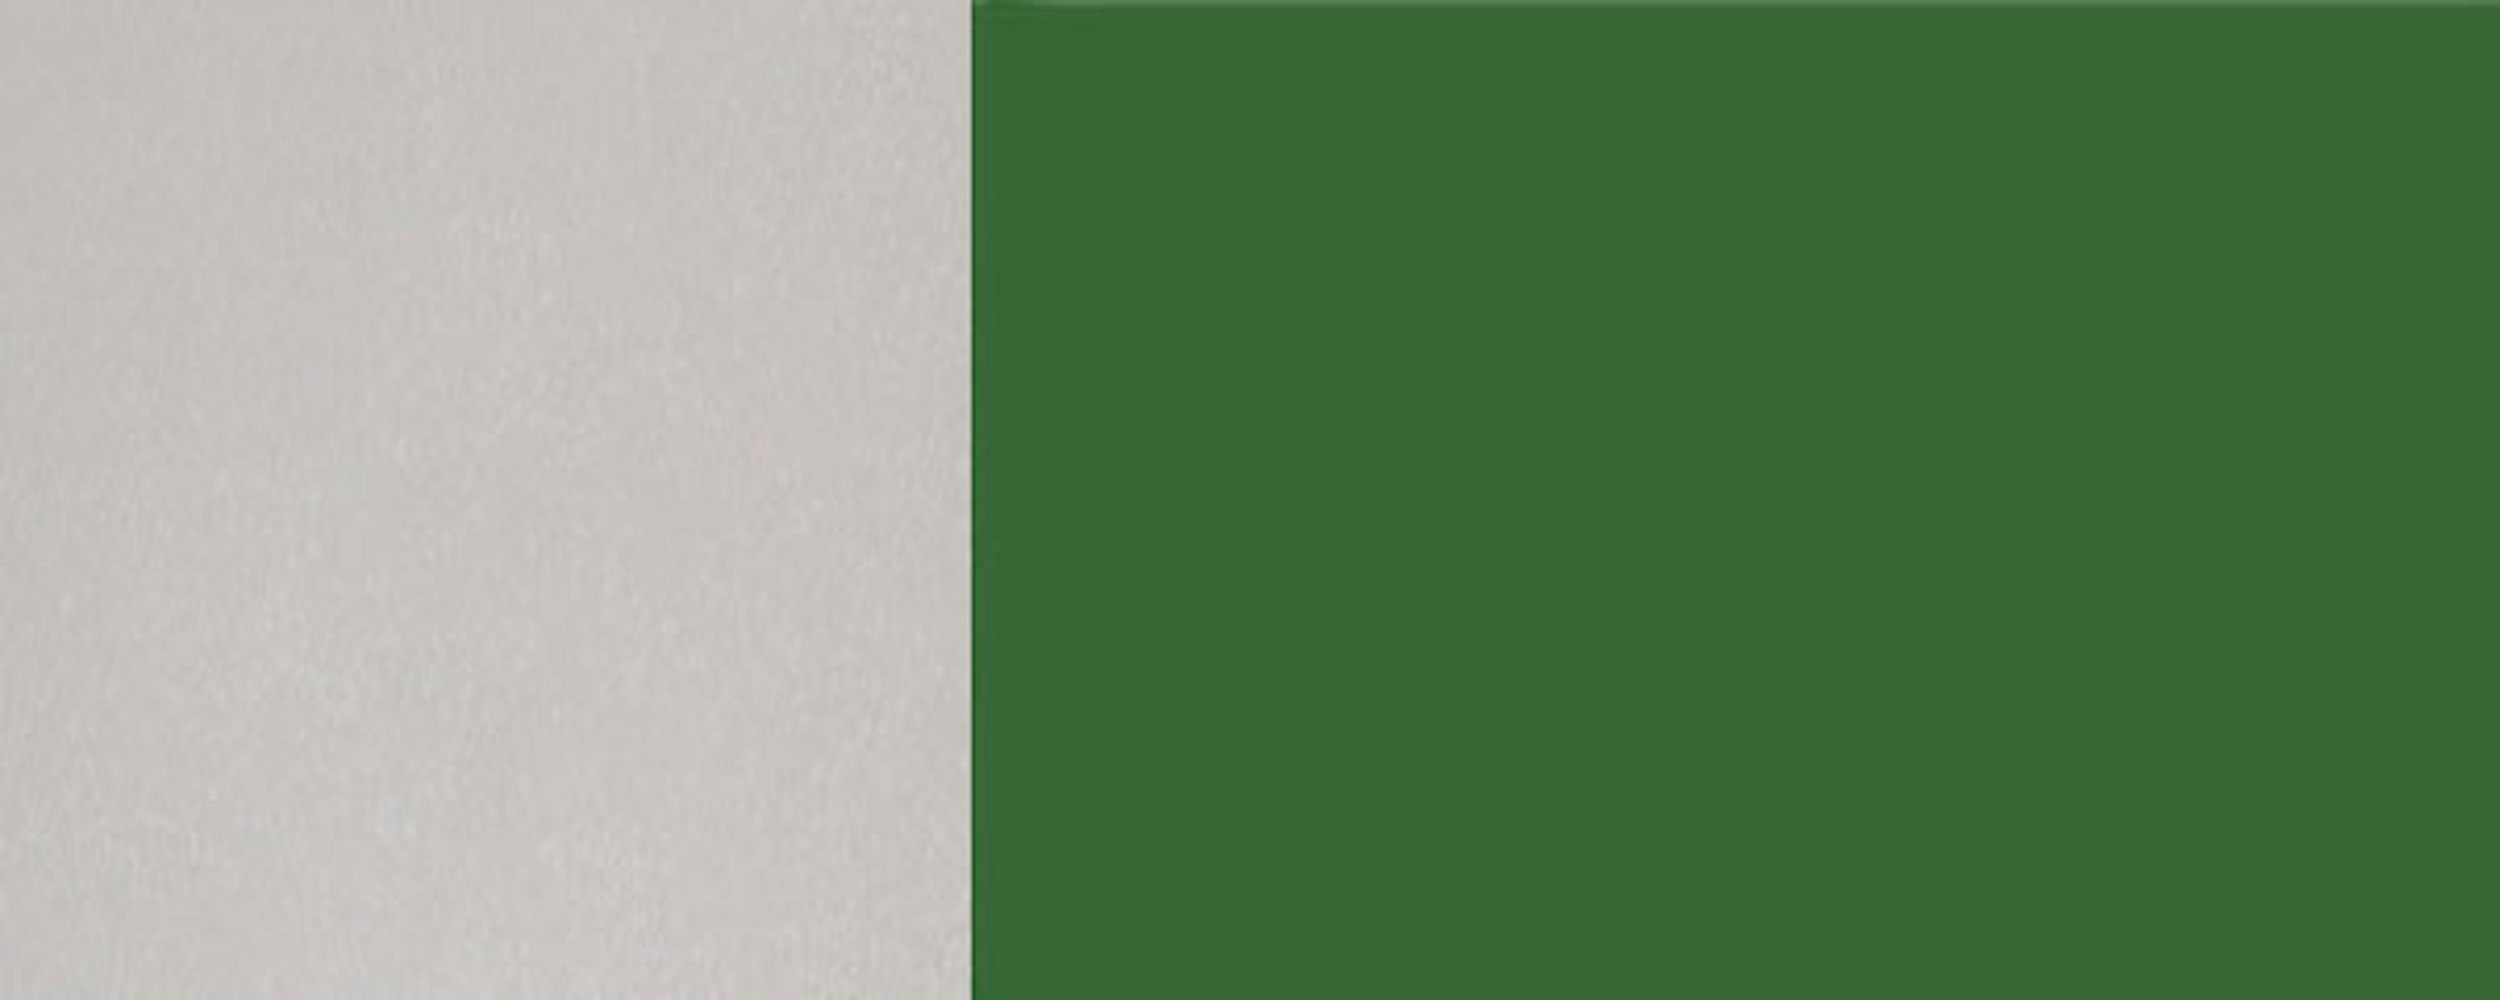 RAL Ausführung Glashängeschrank smaragdgrün Hochglanz Feldmann-Wohnen (Florence) wählbar 6001 und 45cm 1-türig Korpusfarbe Florence Front-, grifflos